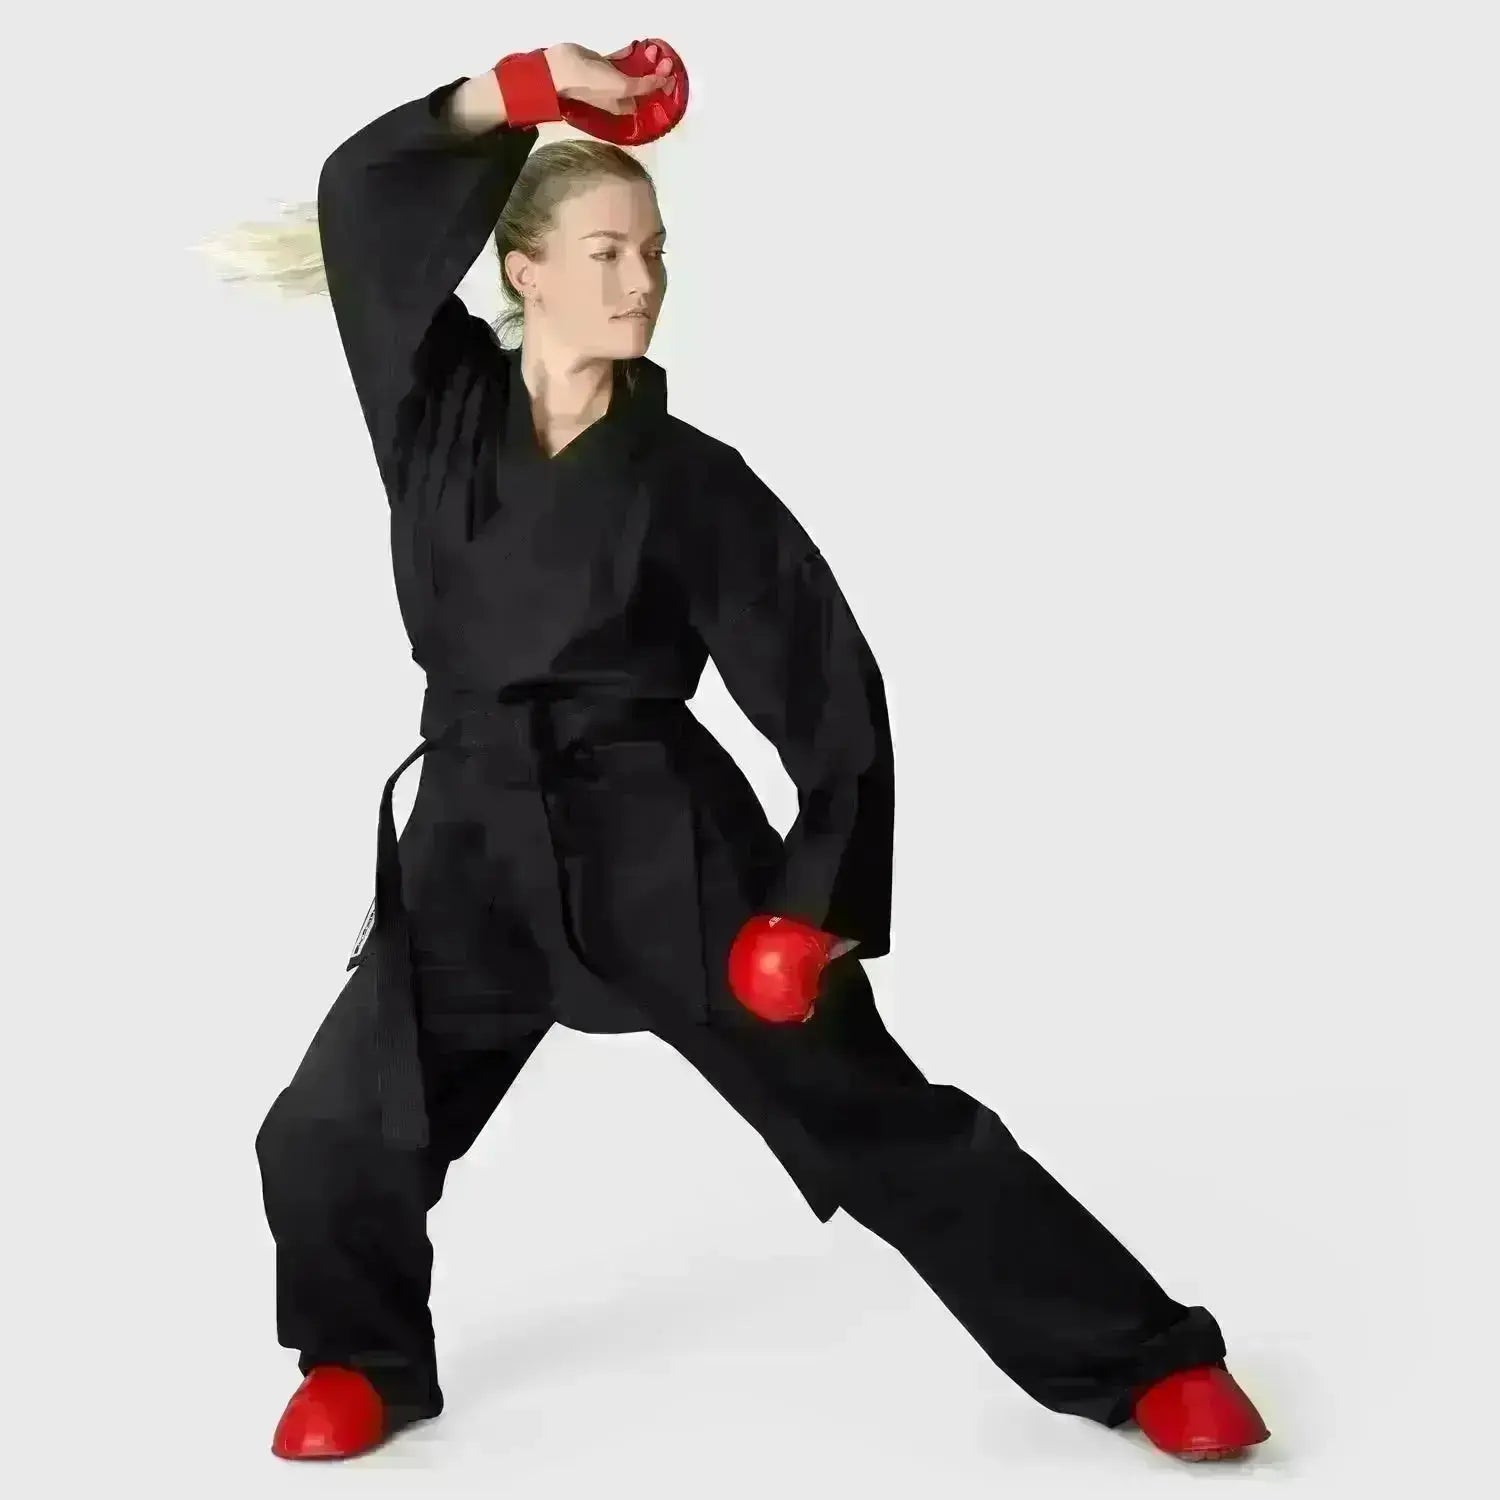 Bytomic Red Label 7oz Lightweight Adult Martial Arts Uniform